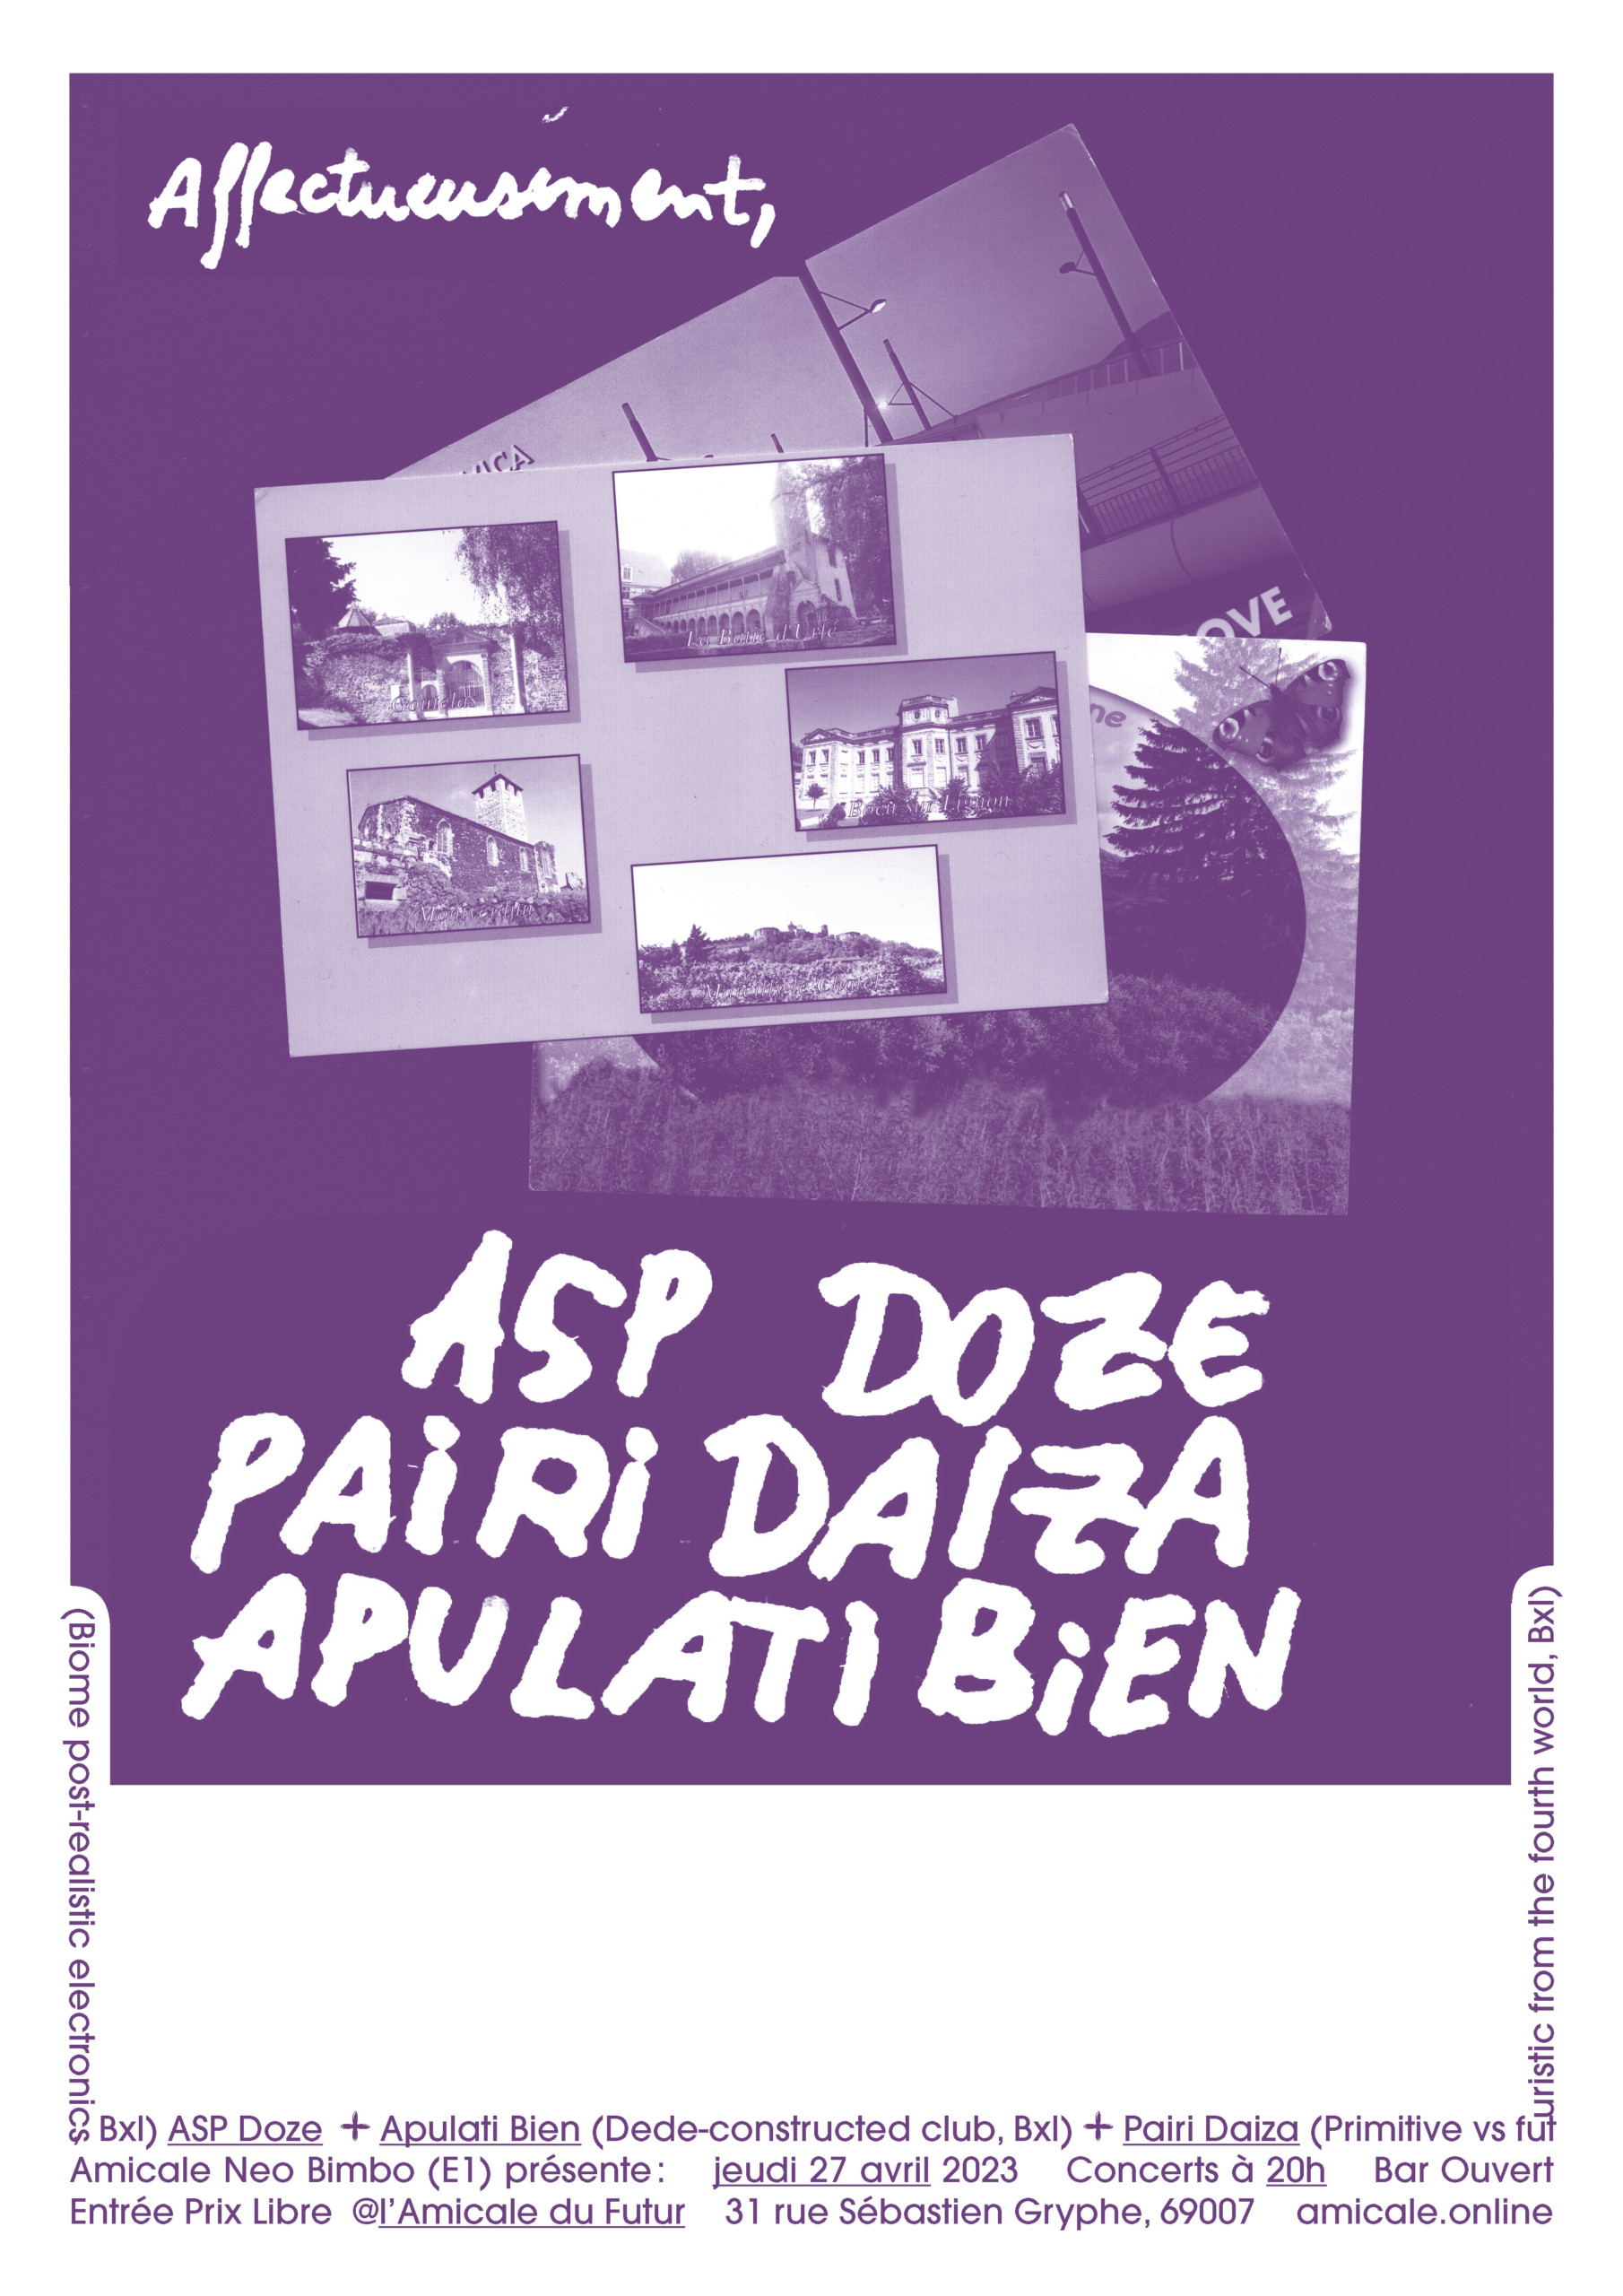 L'Amicale du Futur, 31 rue Sébastien Gryphe Lyon 7e JEU 27/04 – 20H – CONCERT DE ASP DOZE + PAIRI DAIZA + APULATI BIEN